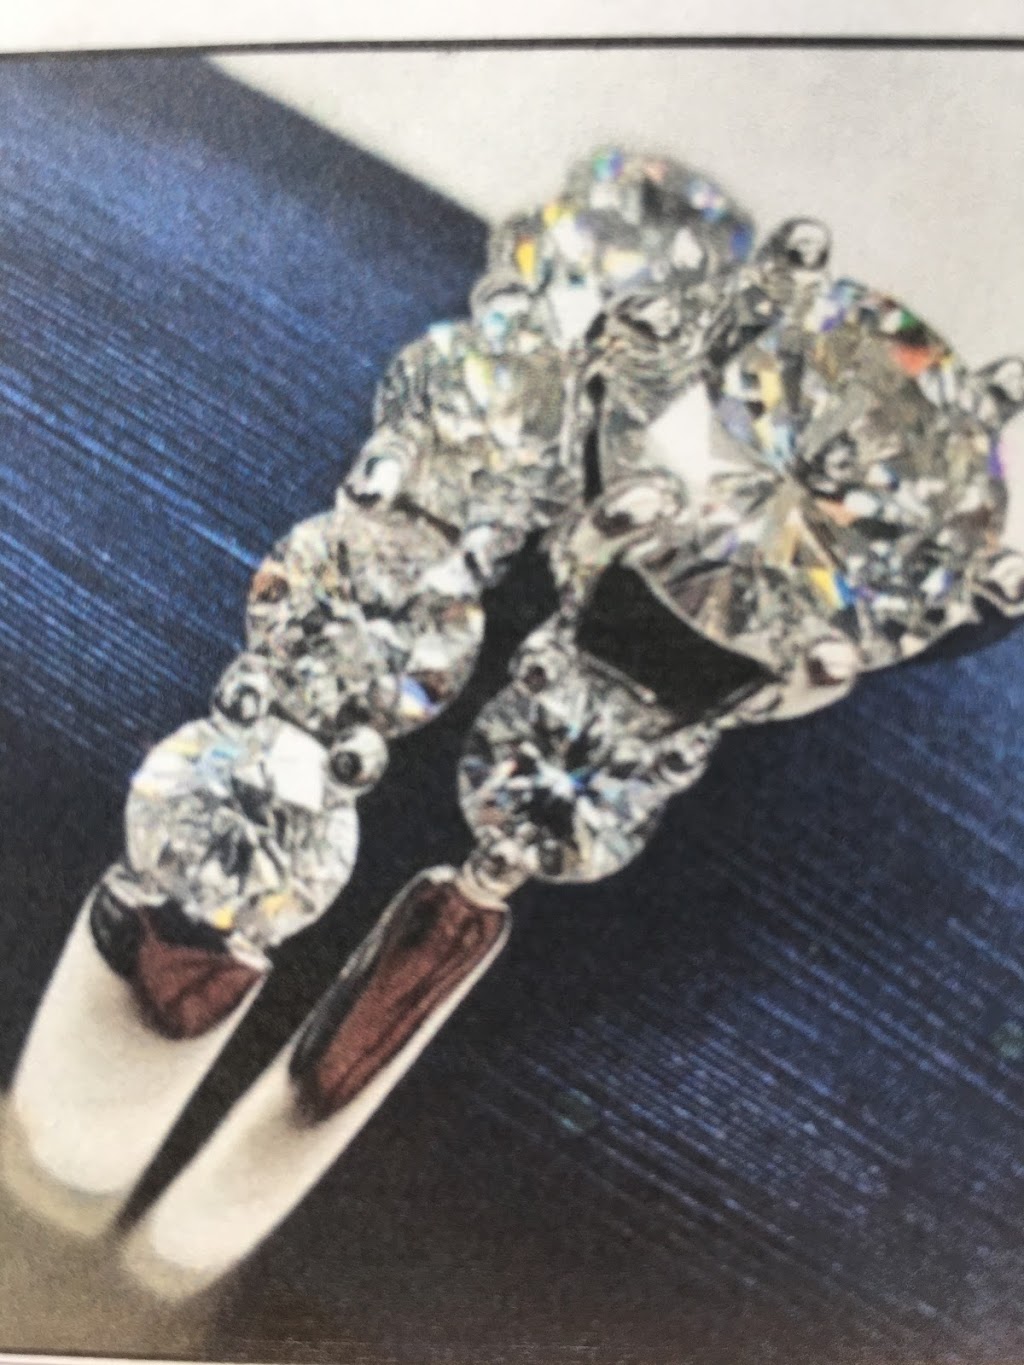 James Diamond Jewelry | 1418 Pocono Blvd, Mt Pocono, PA 18344 | Phone: (570) 839-8384